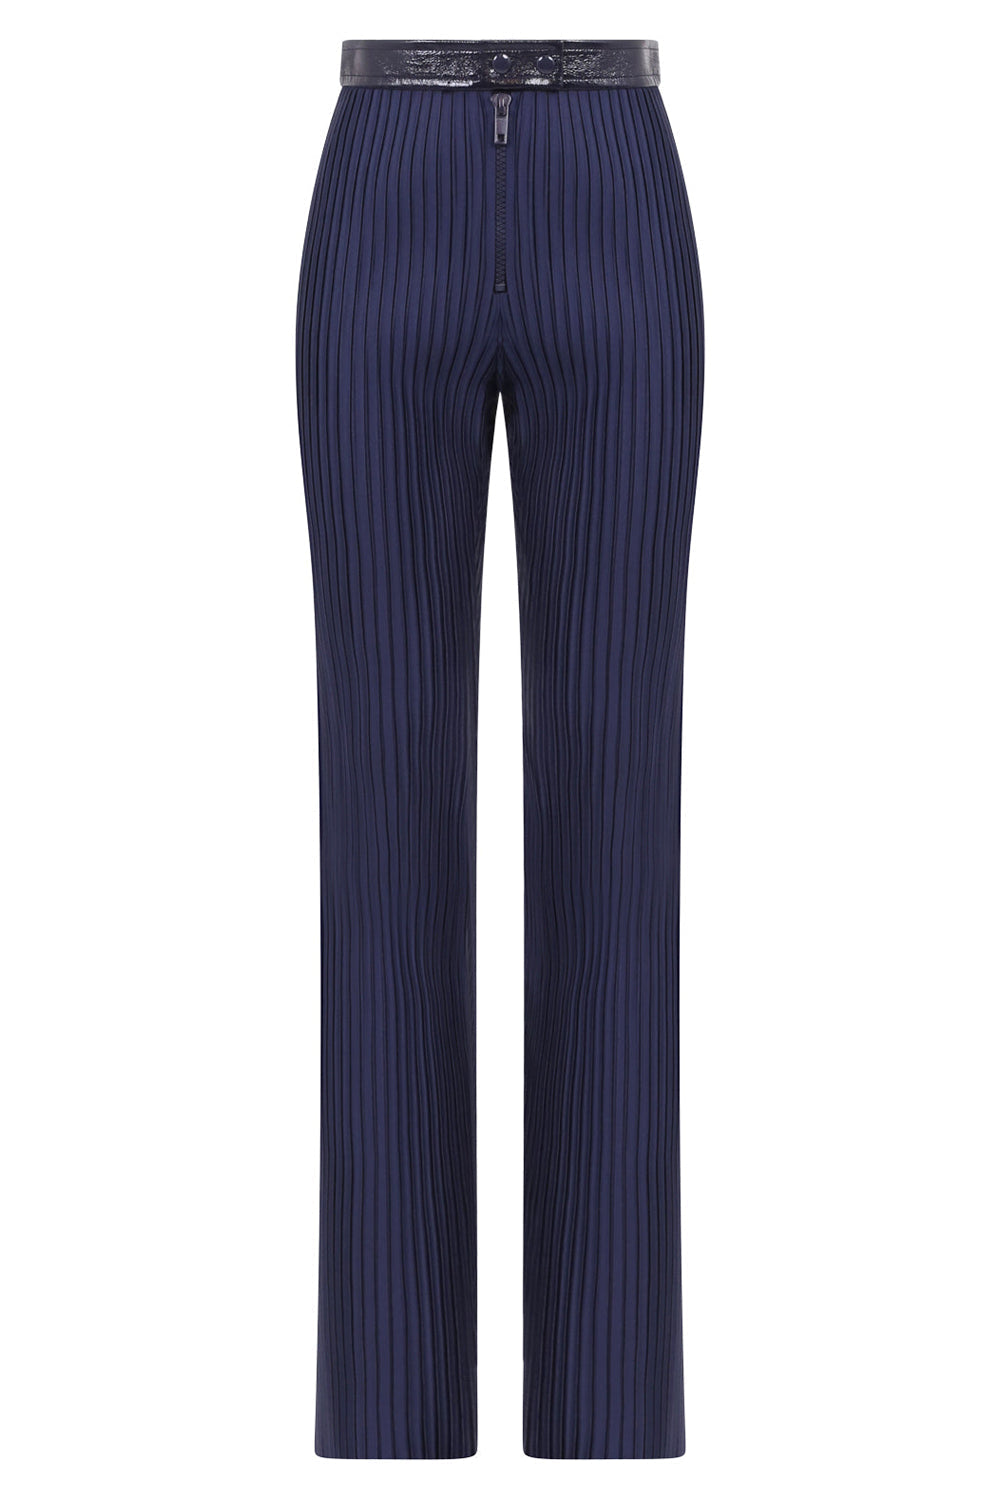 Navy Pants, Navy Blue Pants Online, Buy Women's Navy Pants Australia